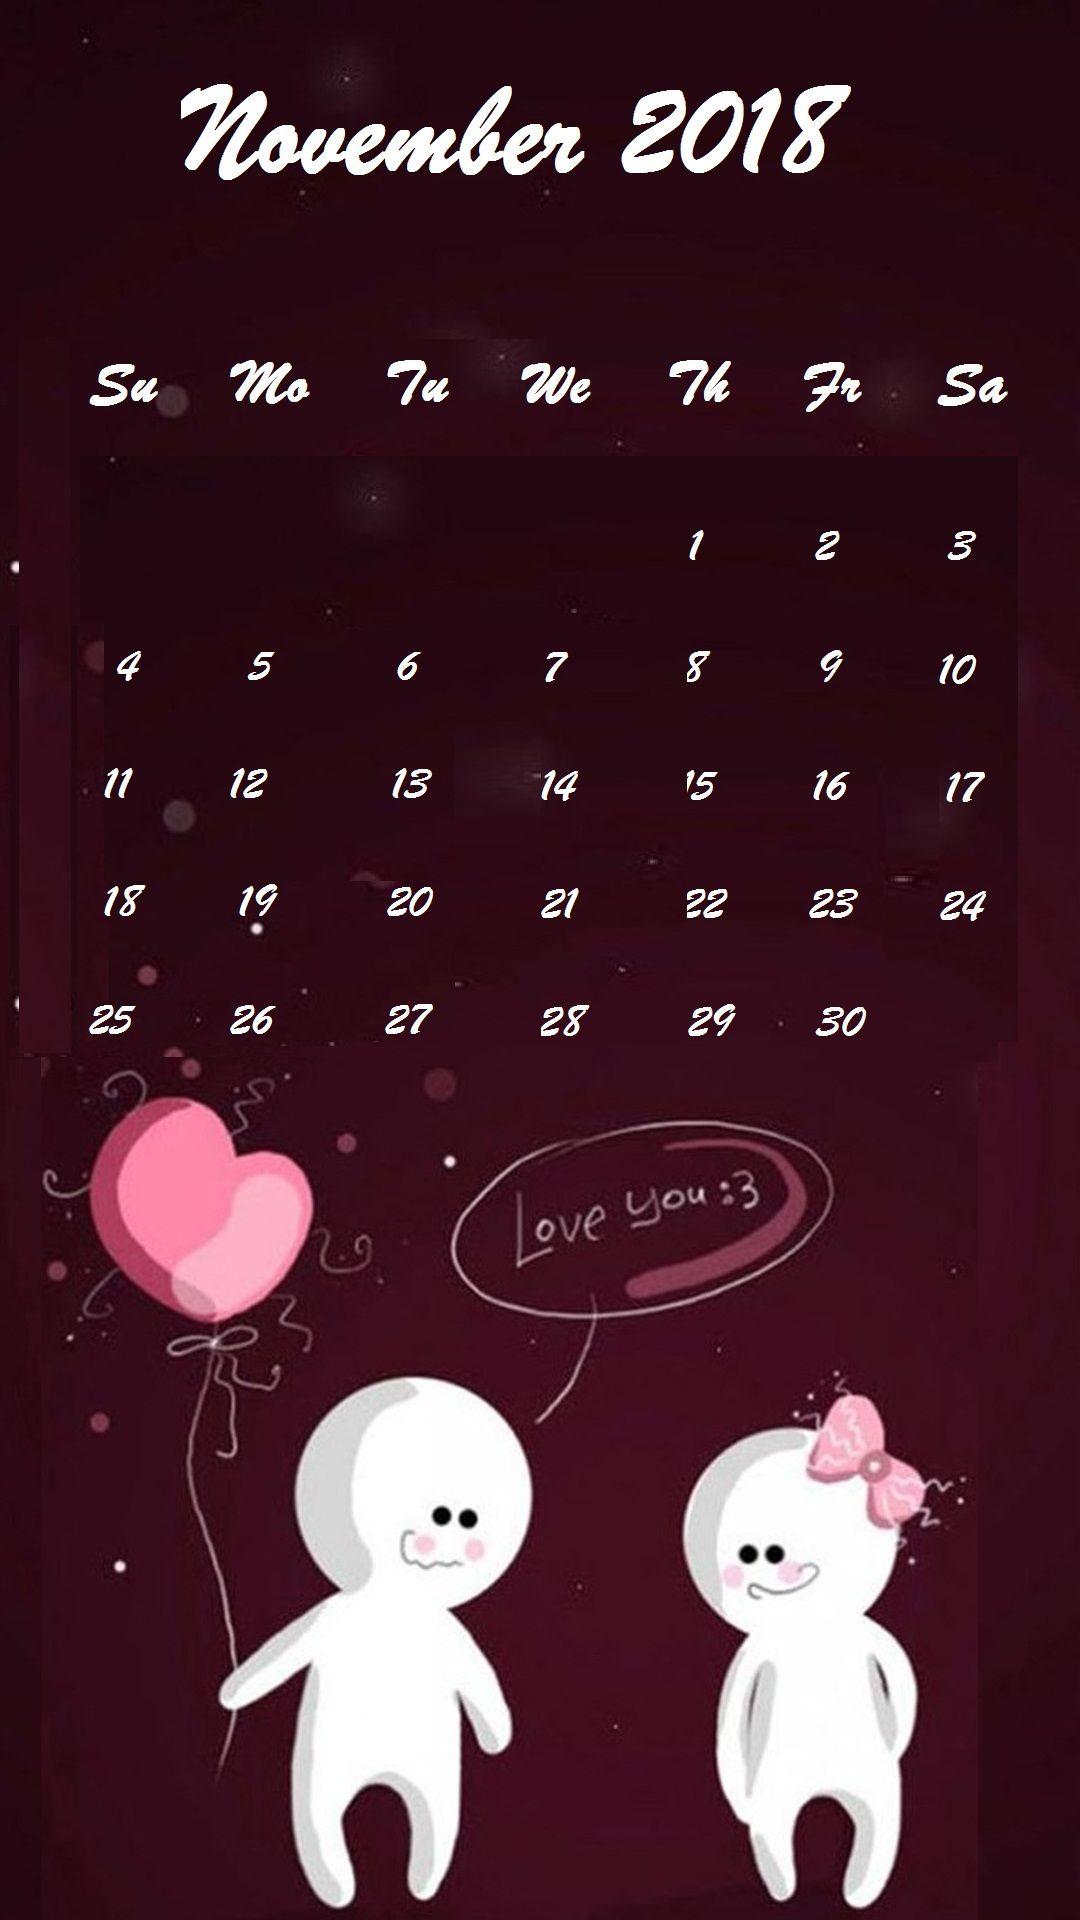 November 2018 iPhone Calendar Wallpaper